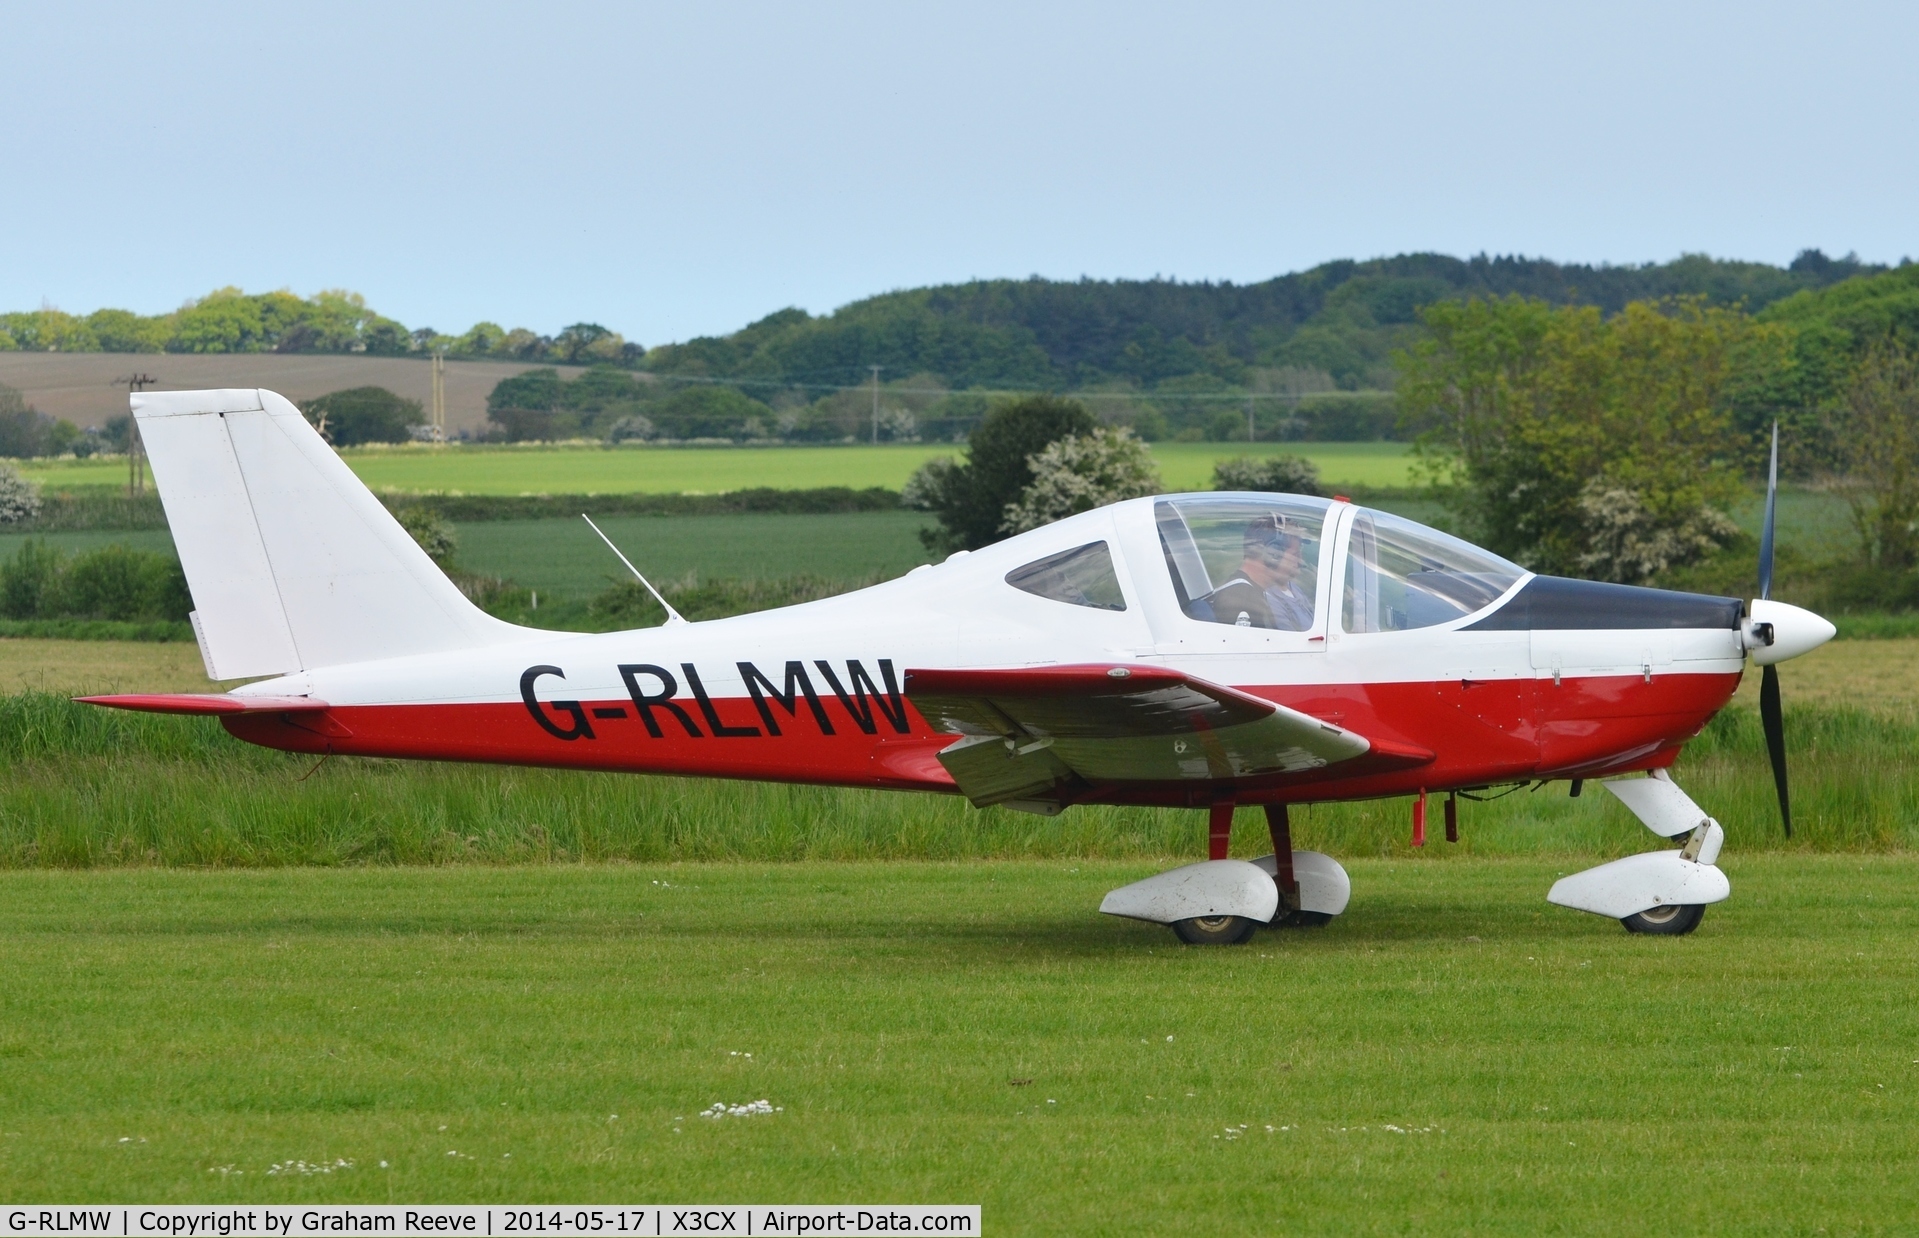 G-RLMW, 2006 Tecnam P-2002EA Sierra C/N PFA 333-14536, Just landed at Northrepps.